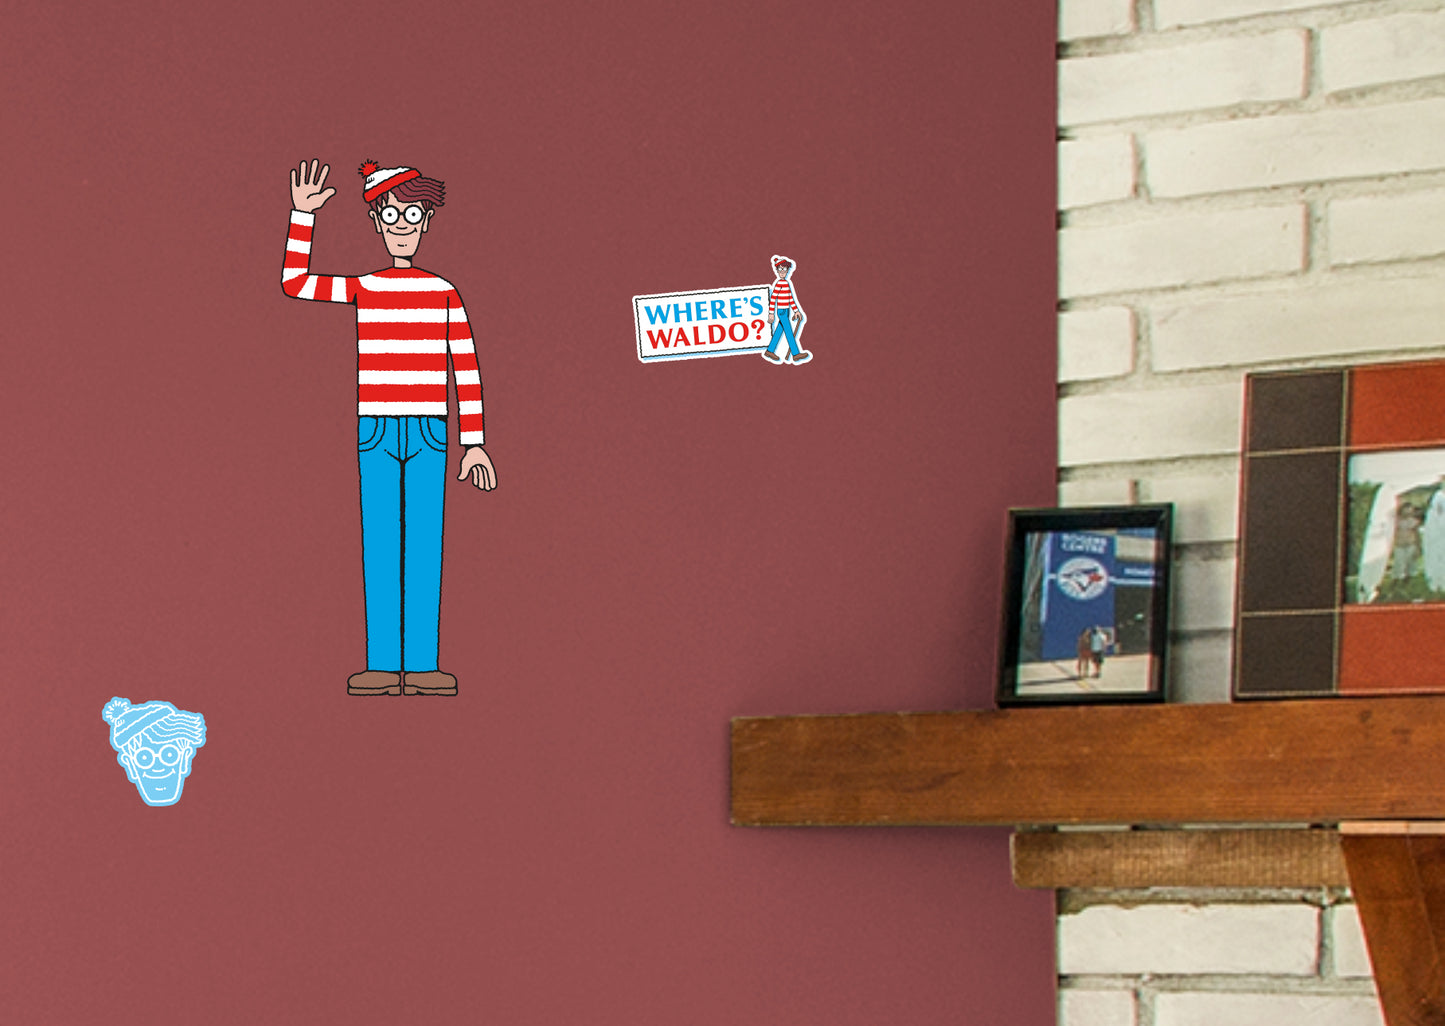 Where's Waldo: Waldo RealBig - Officially Licensed NBC Universal Removable Adhesive Decal